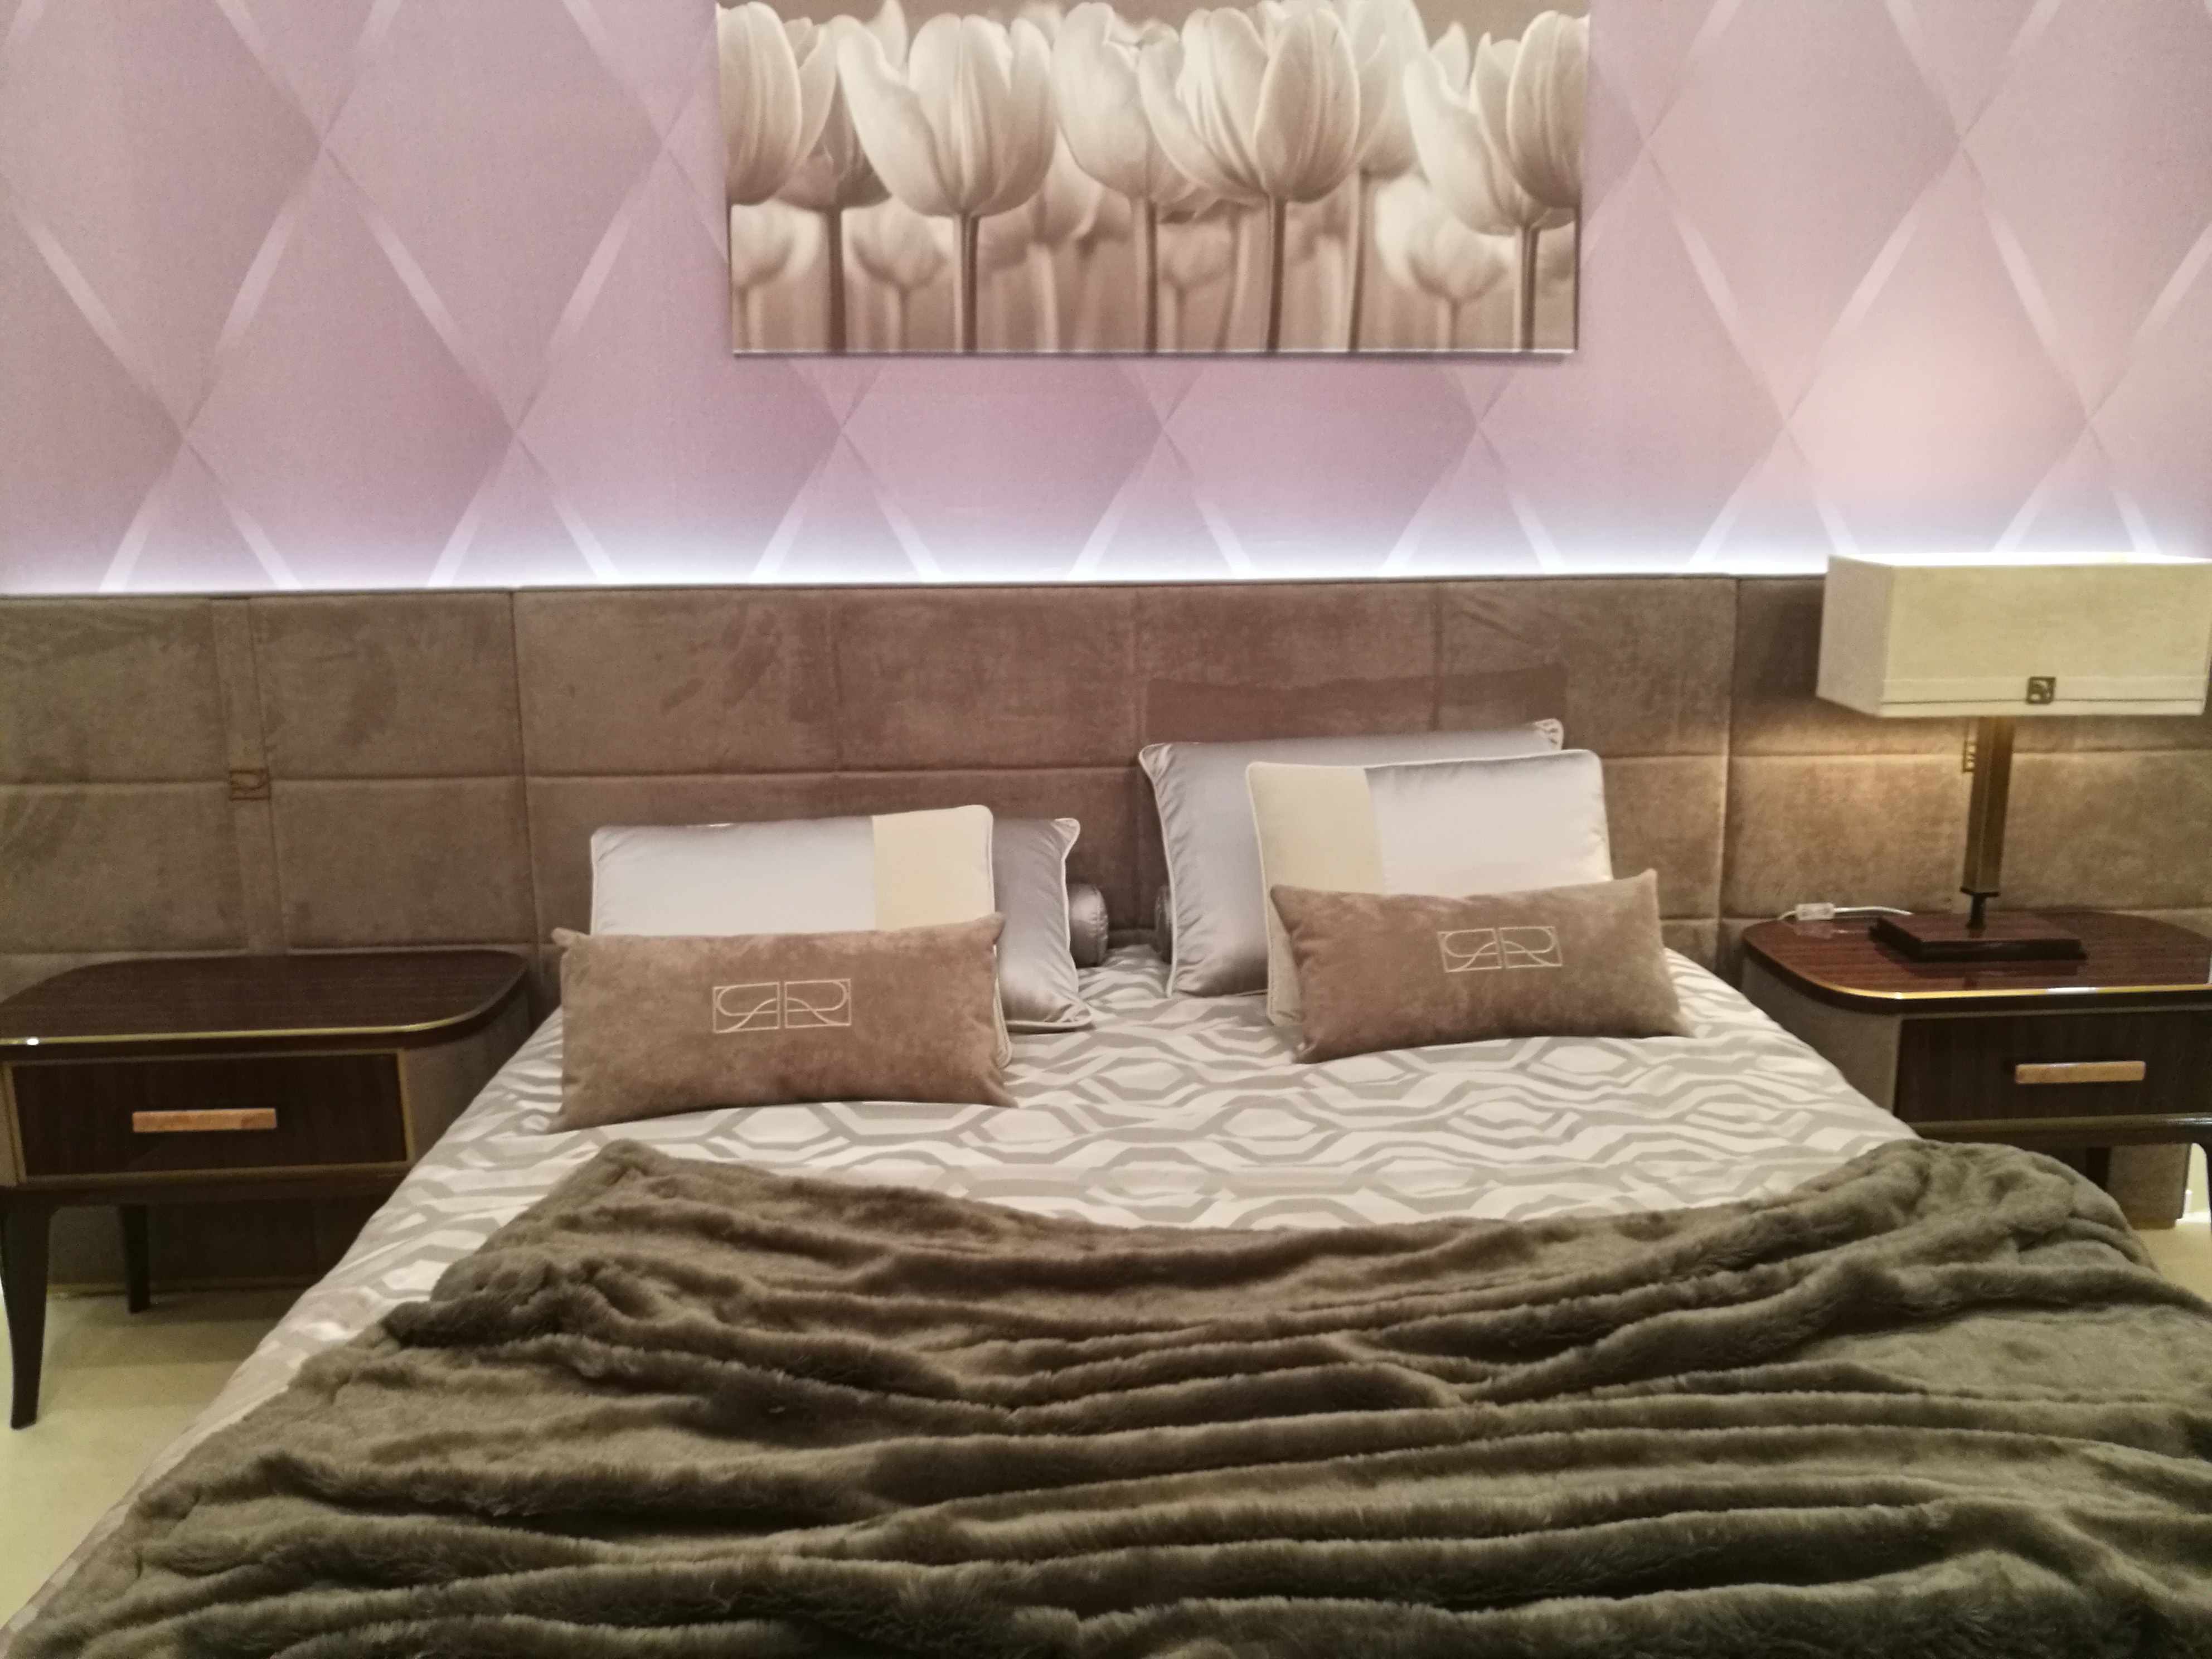 Luxury bedroom